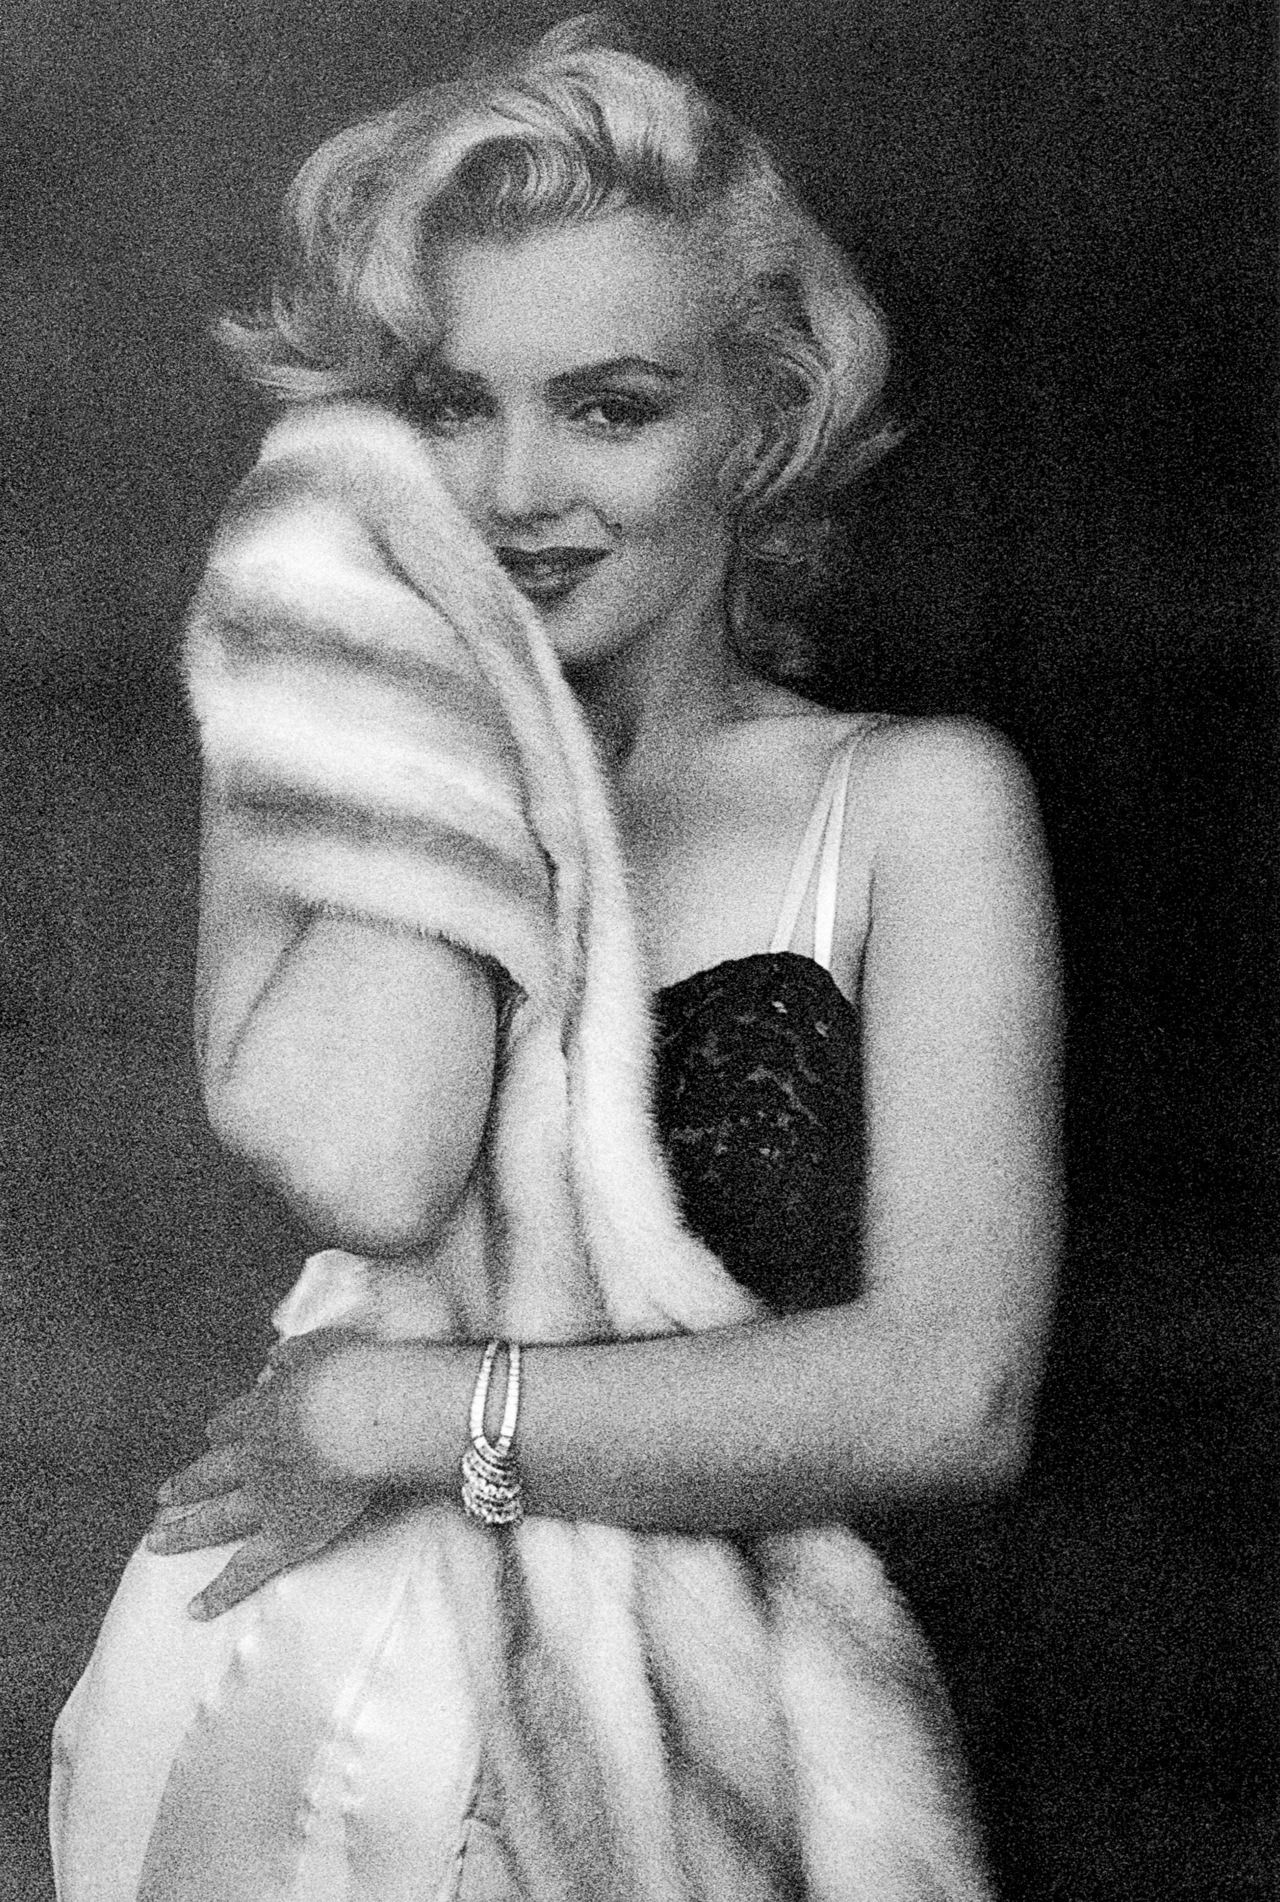 Poster Marilyn Monroe Wallpapers